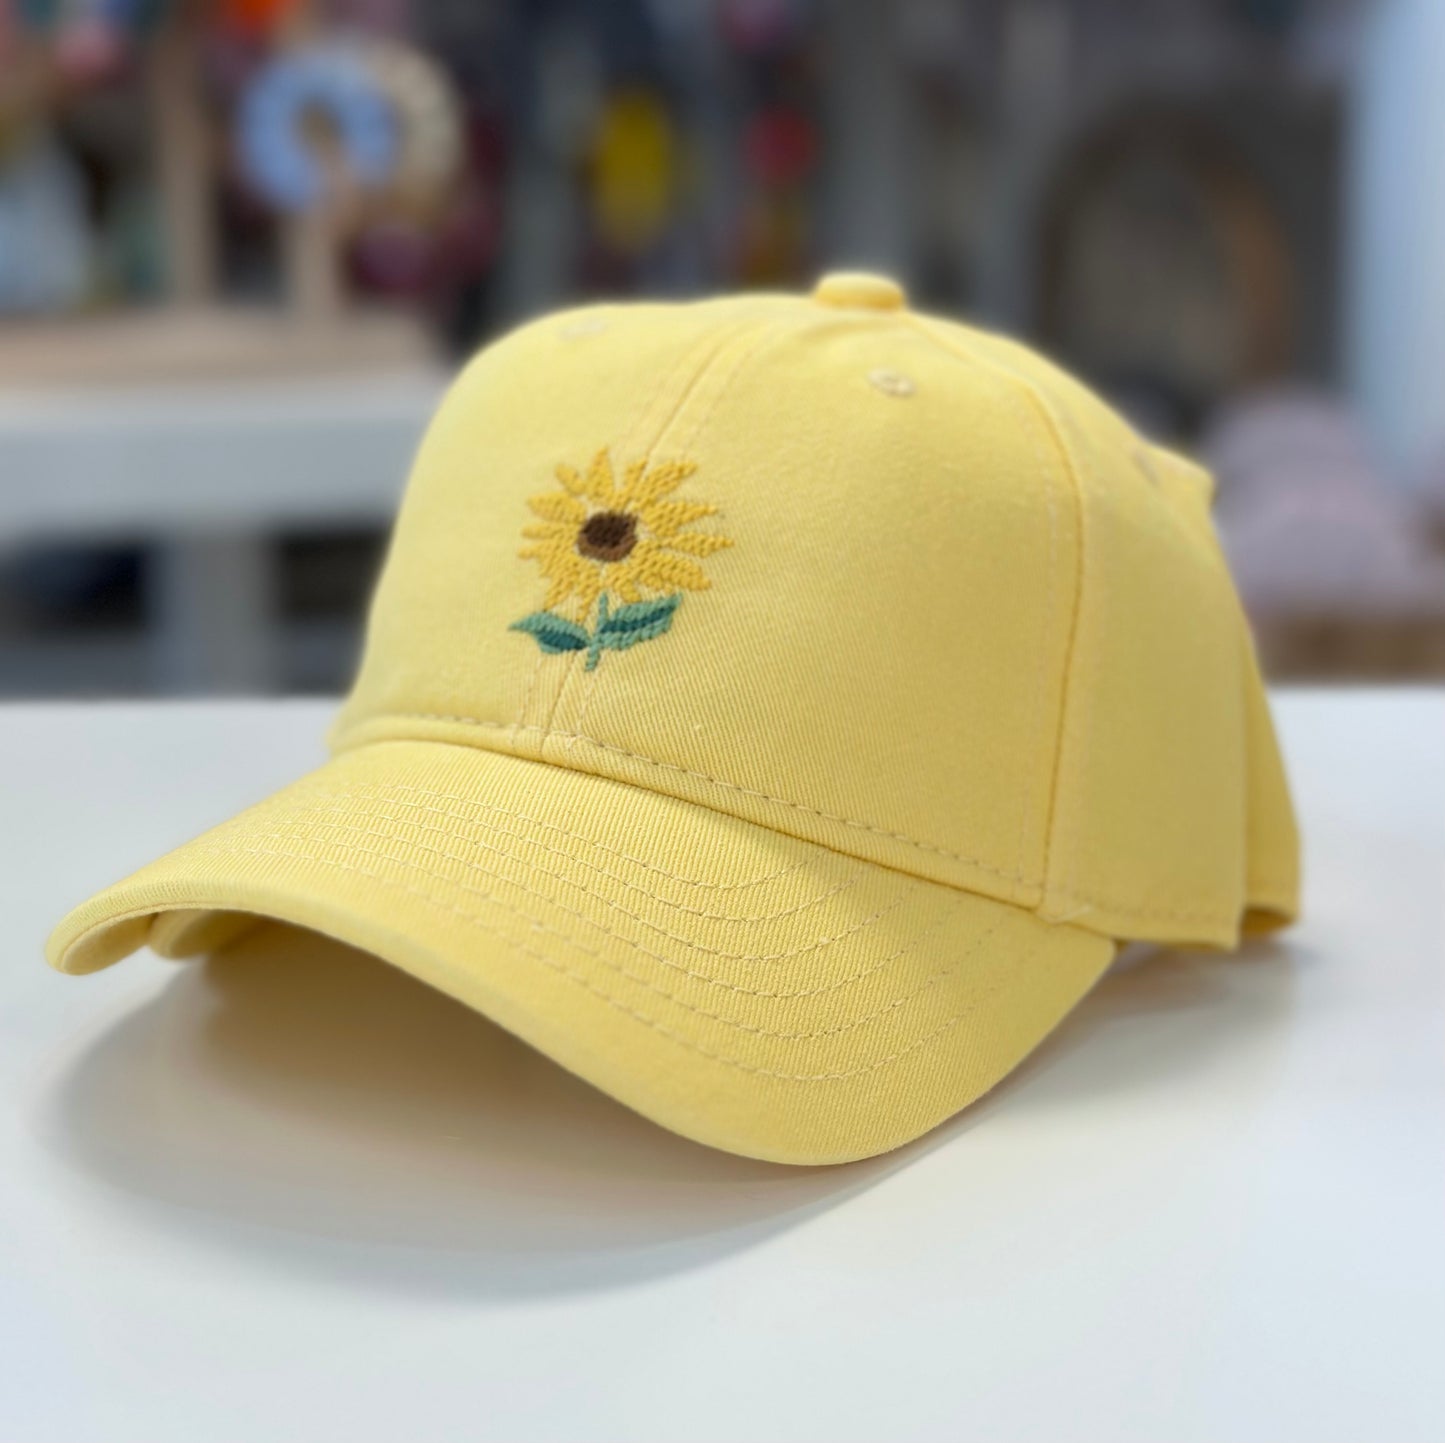 Sunflower Needlepoint Baseball Cap, Light Yellow